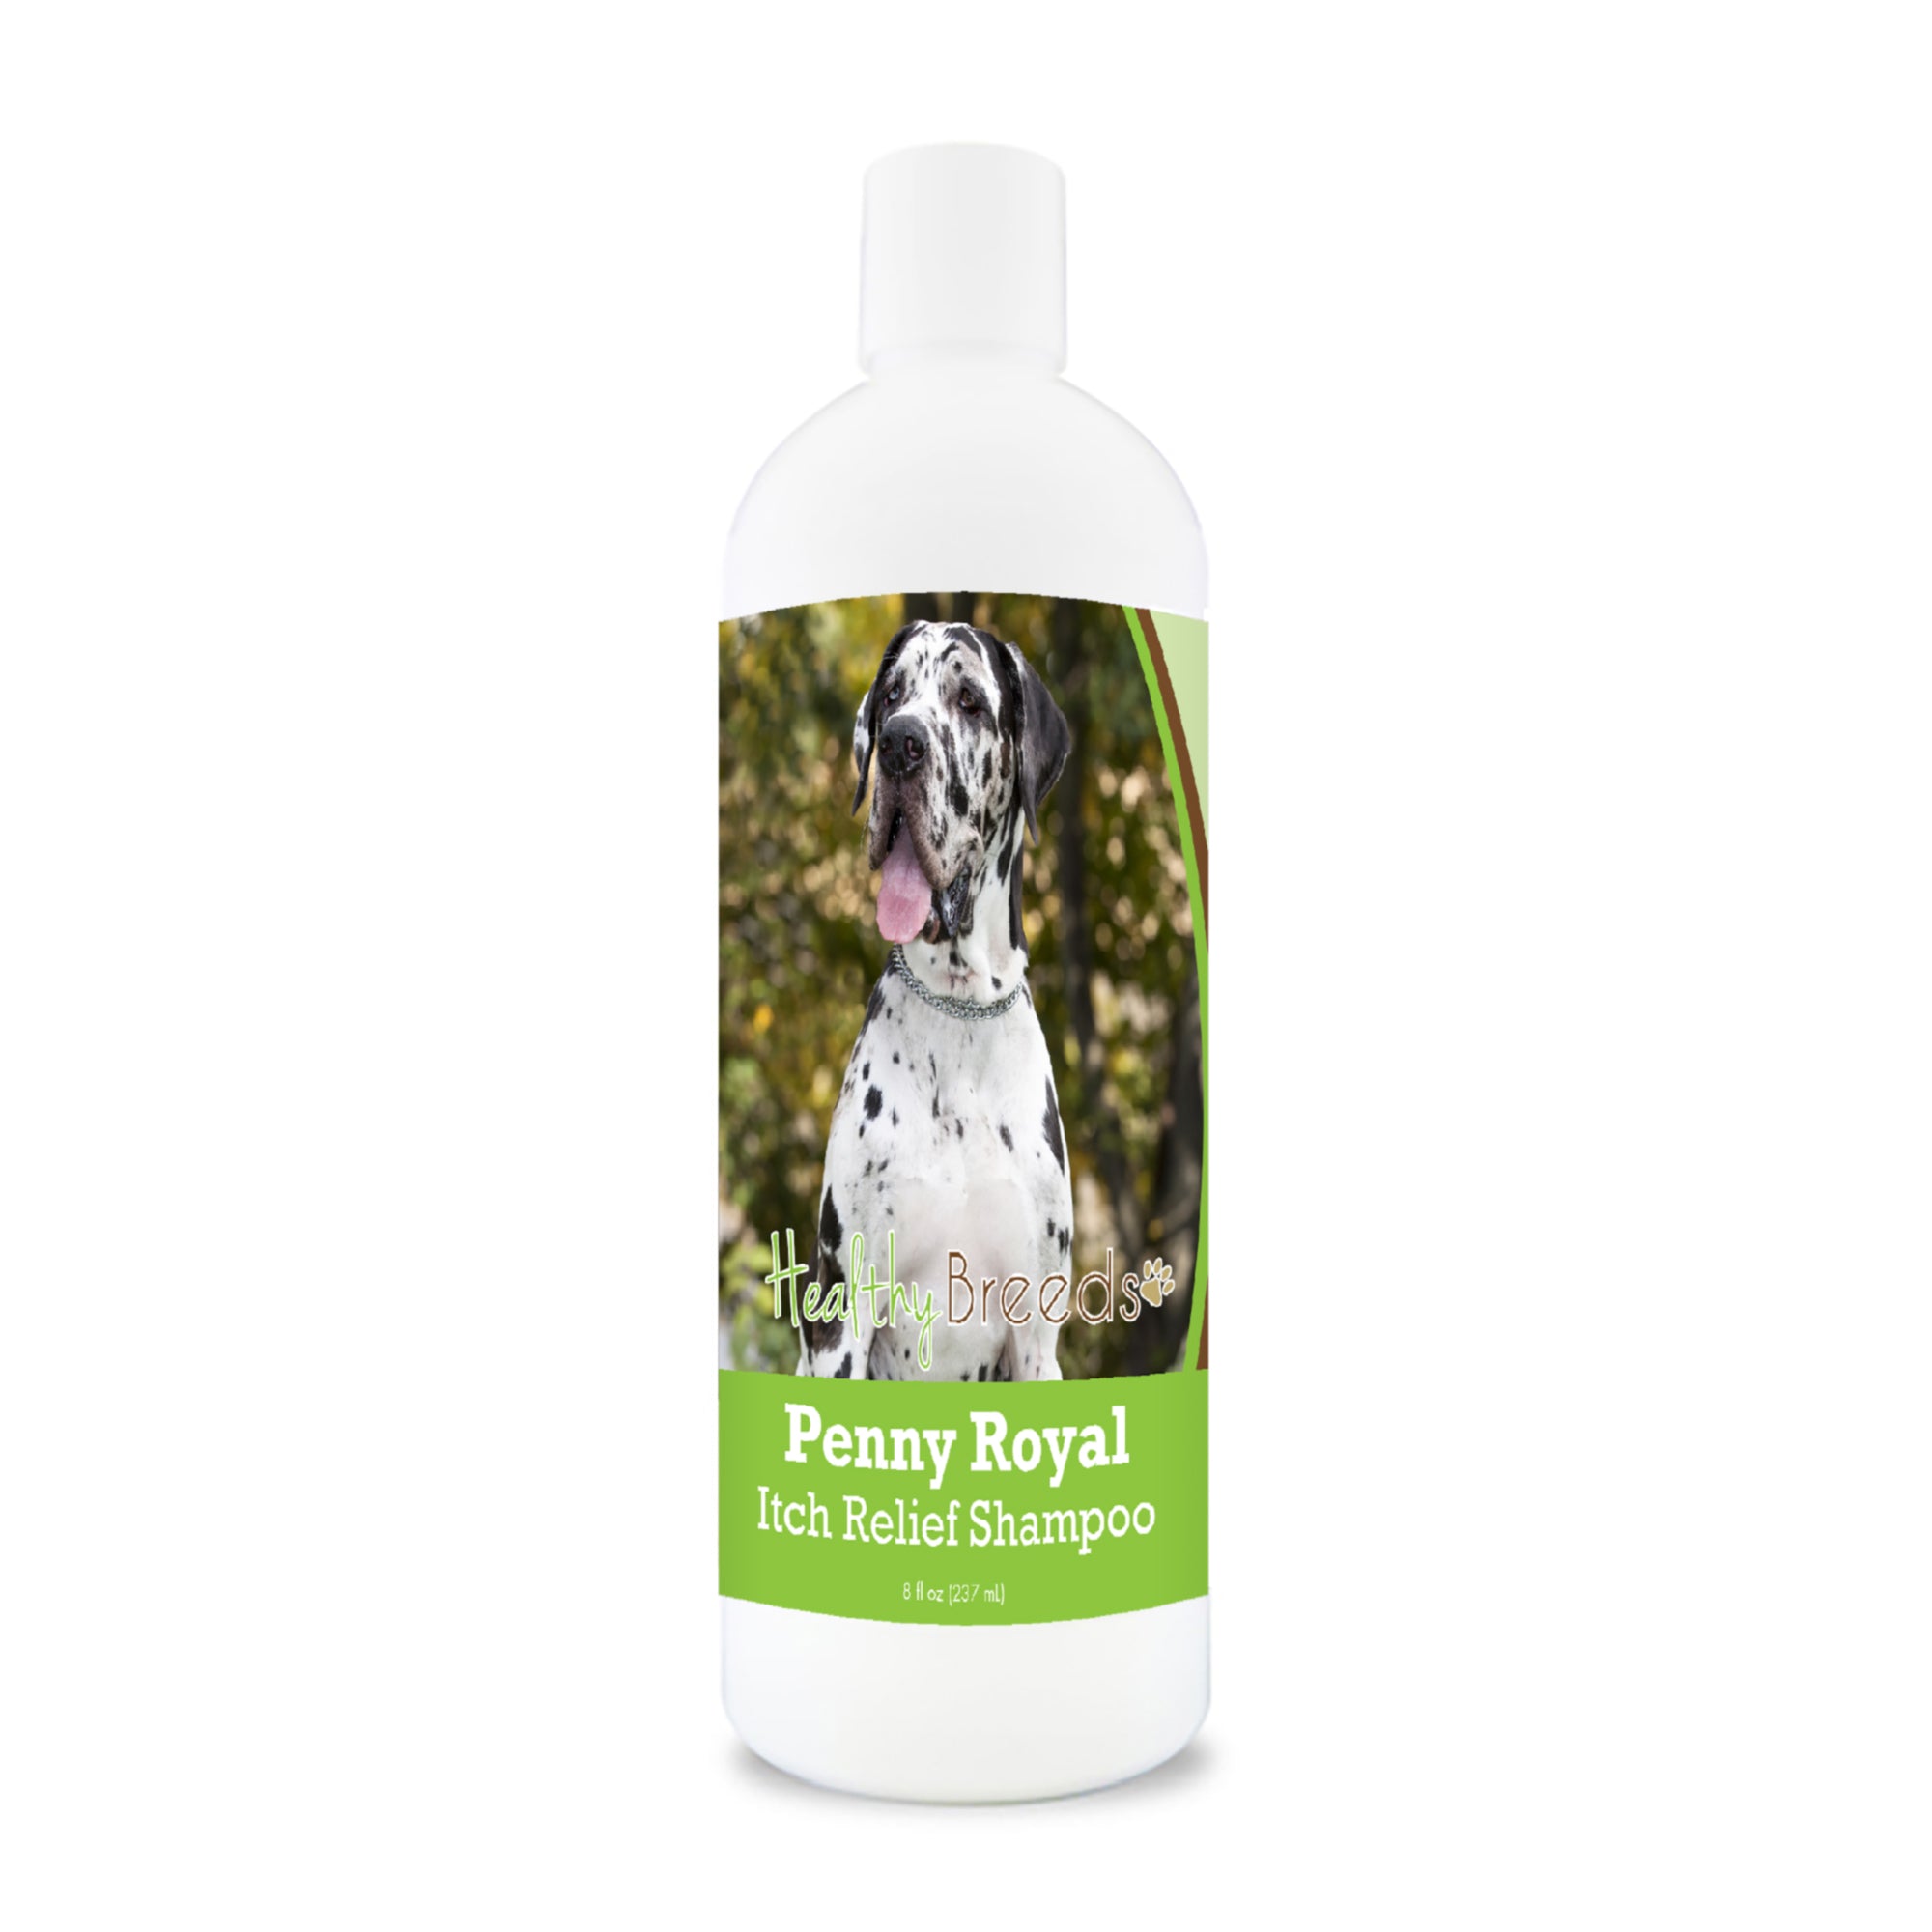 Great Dane Penny Royal Itch Relief Shampoo 8 oz